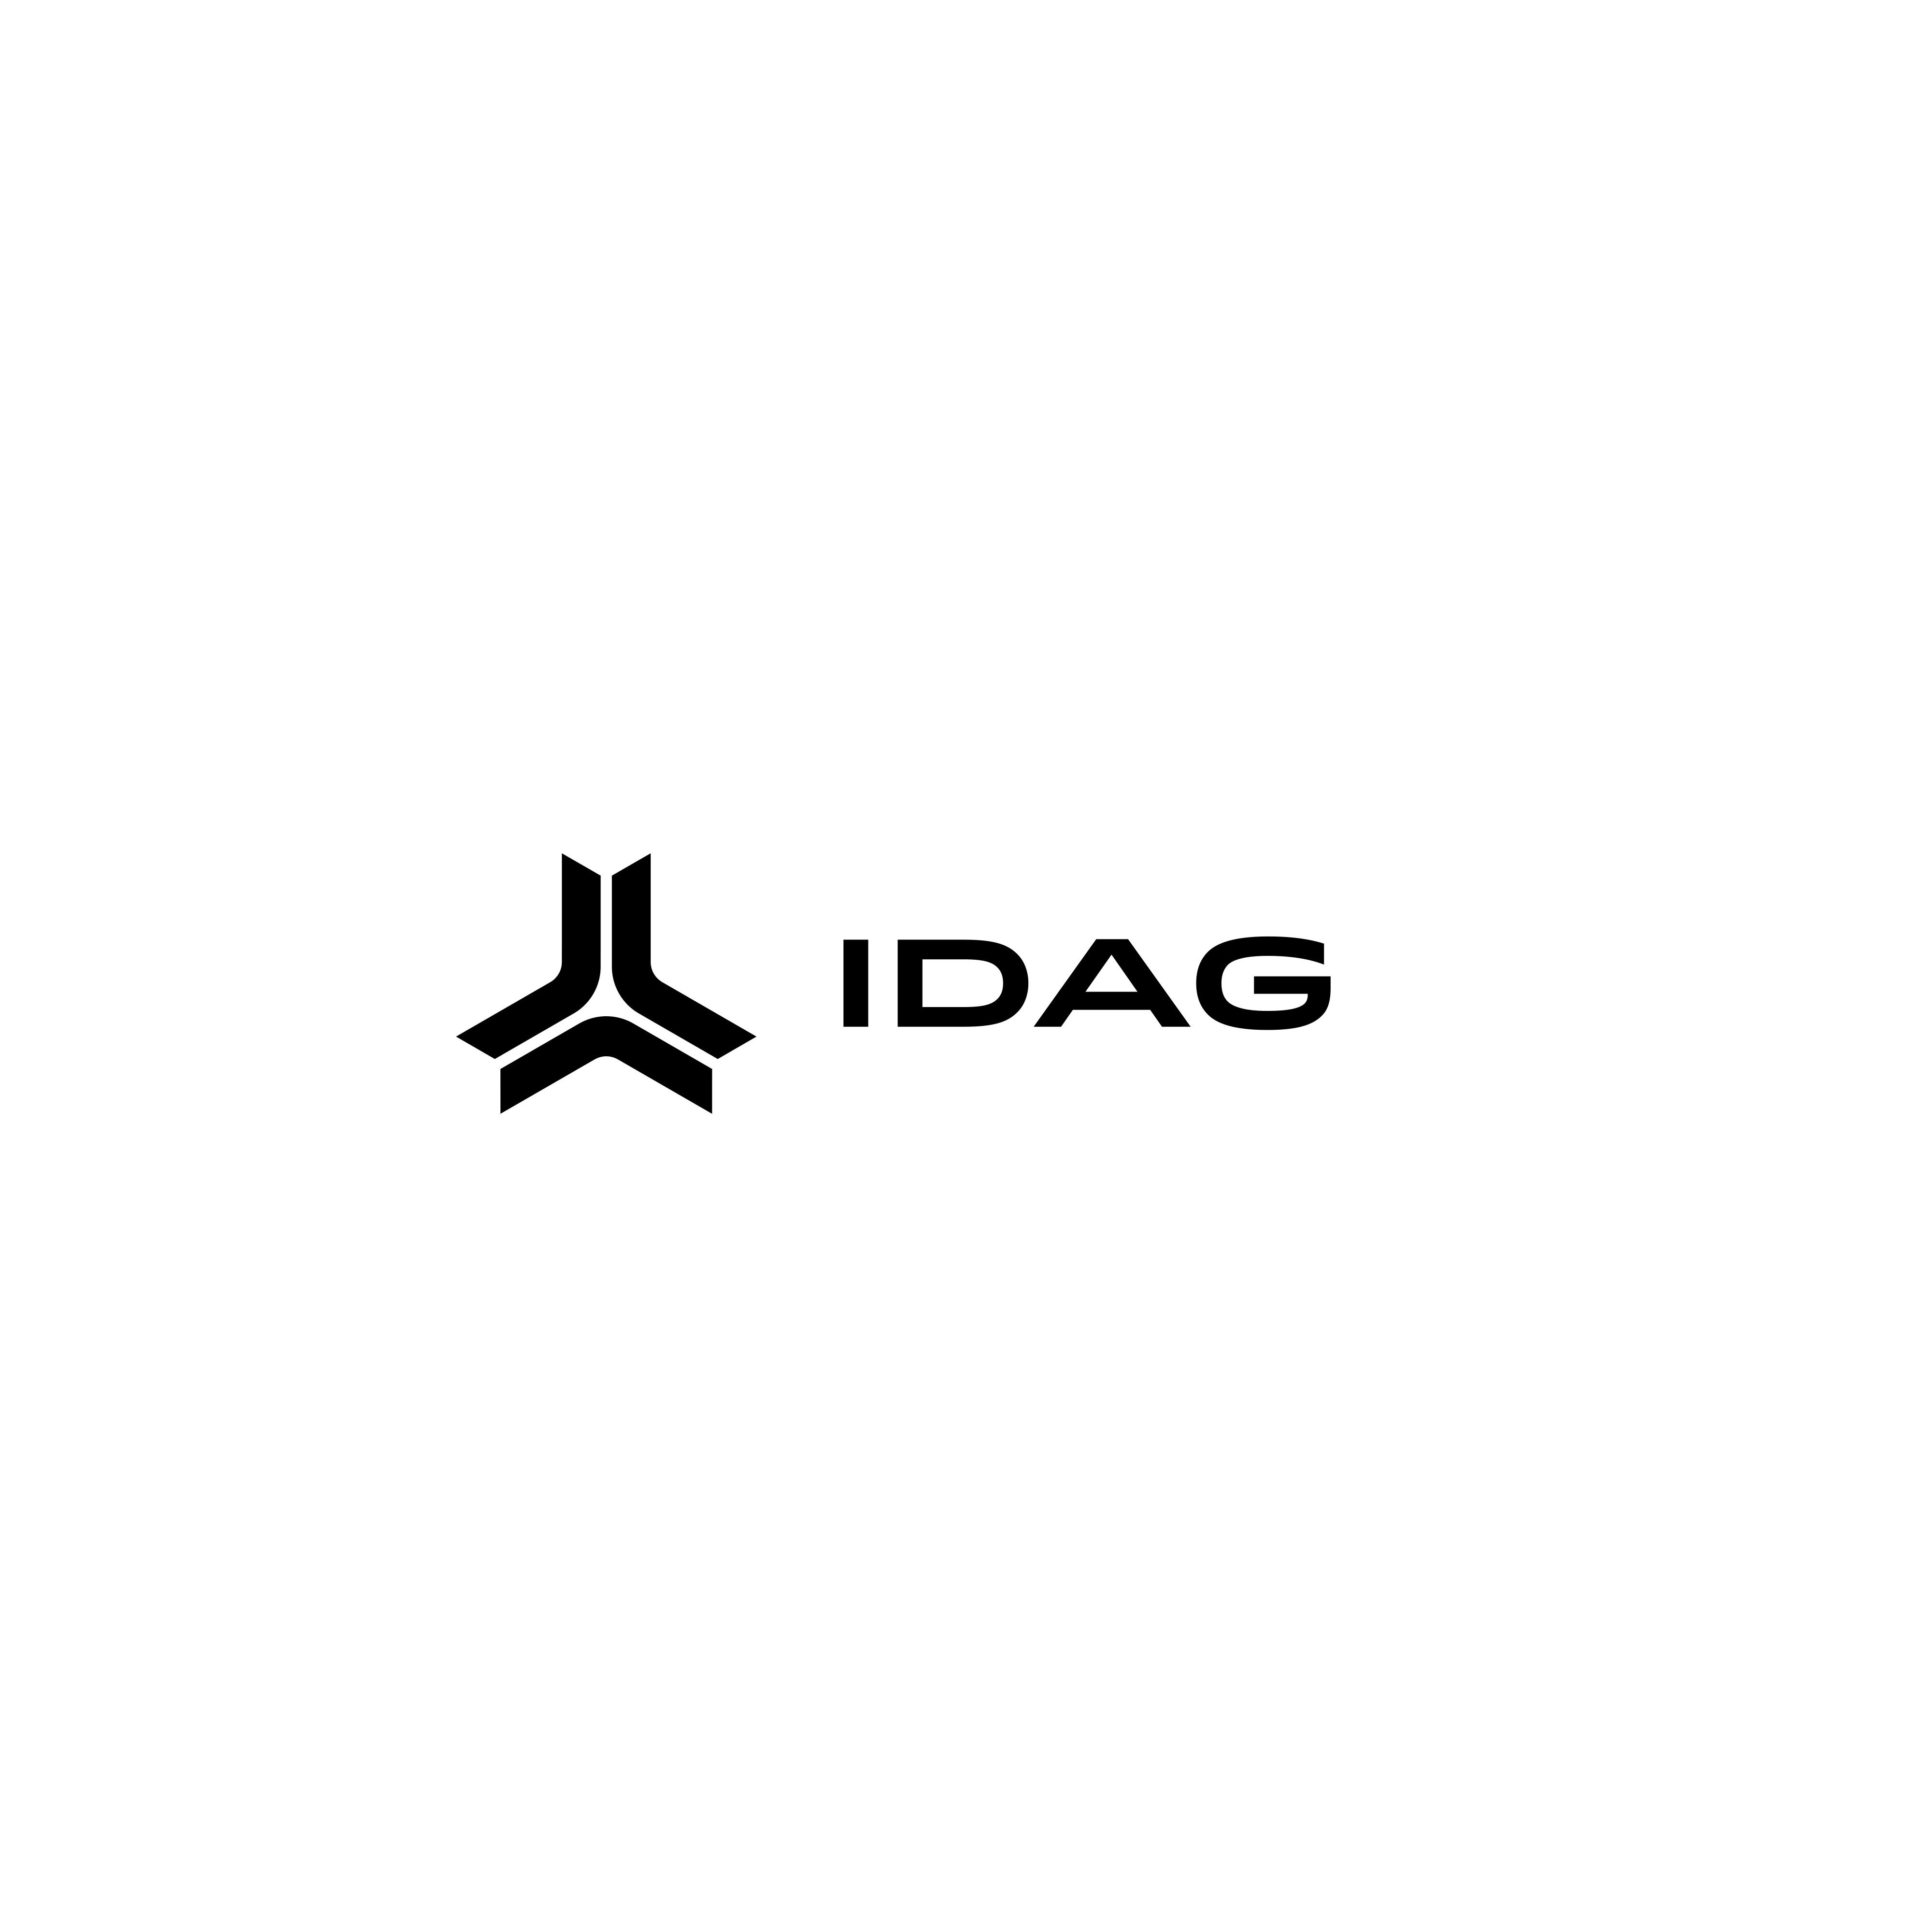 International Defence & Aerospace Group (IDAG)